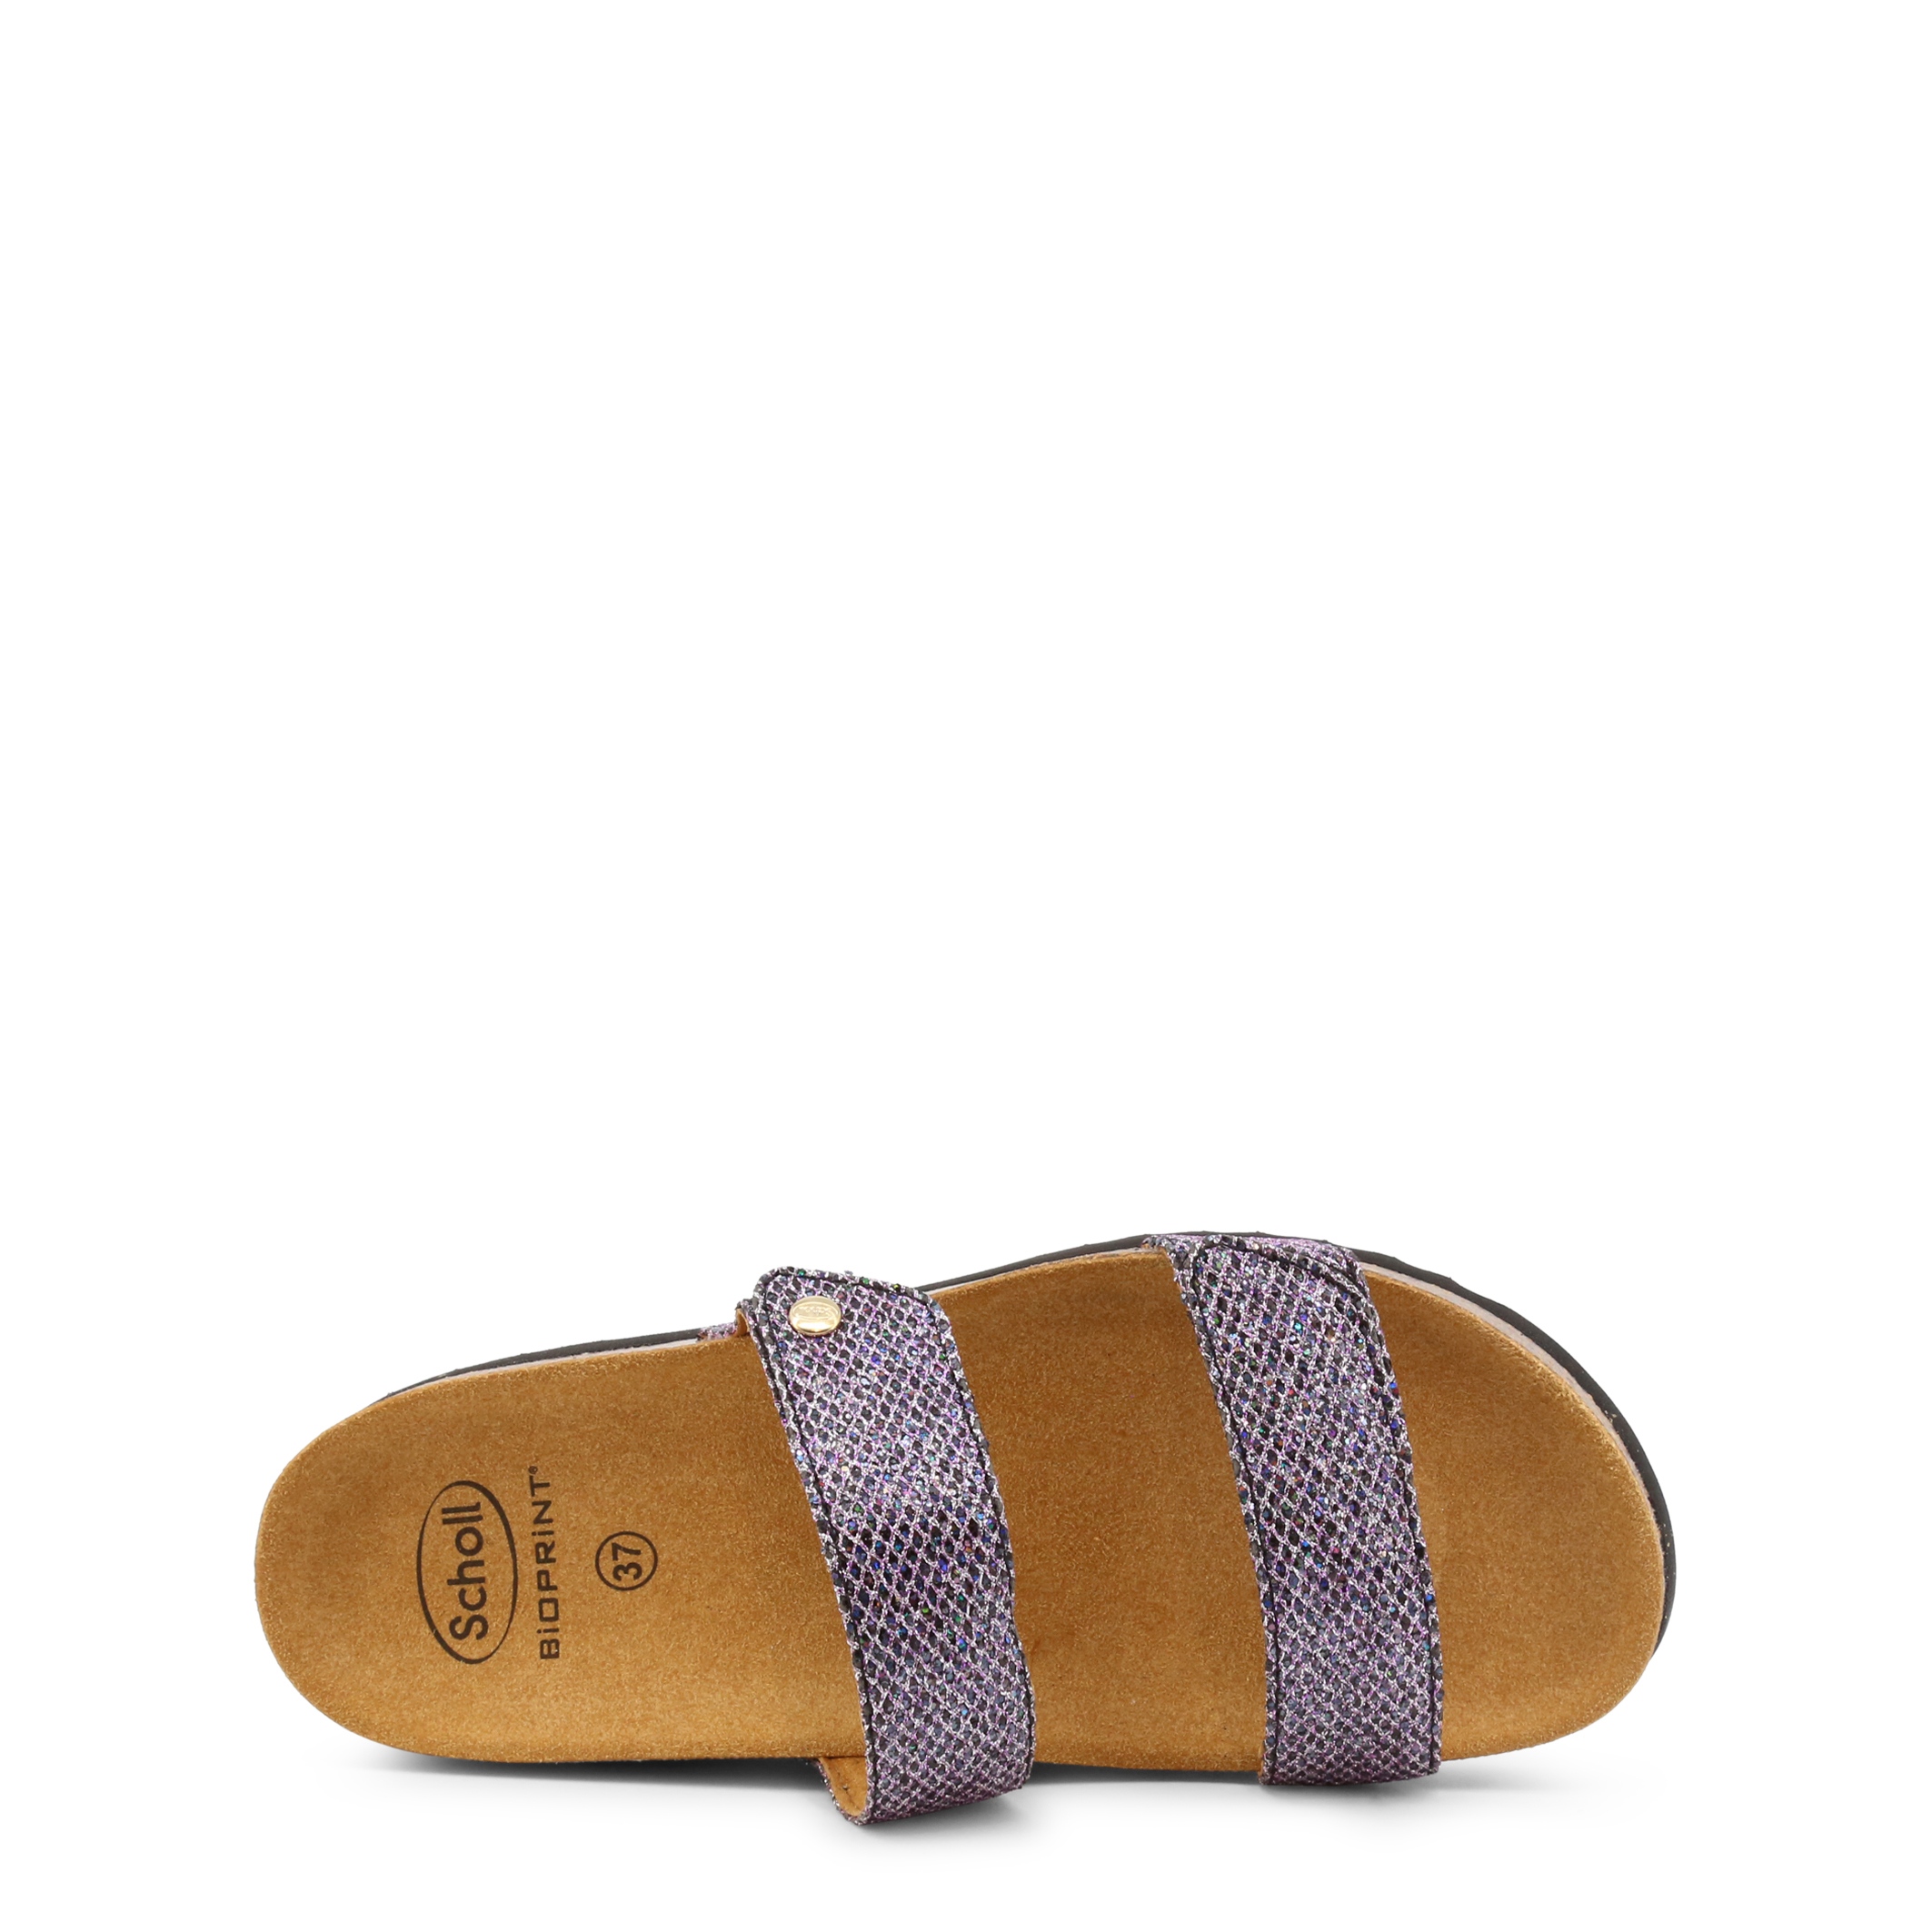 Dr Scholl purple Flip Flops for Women - LUSAKA-F27749